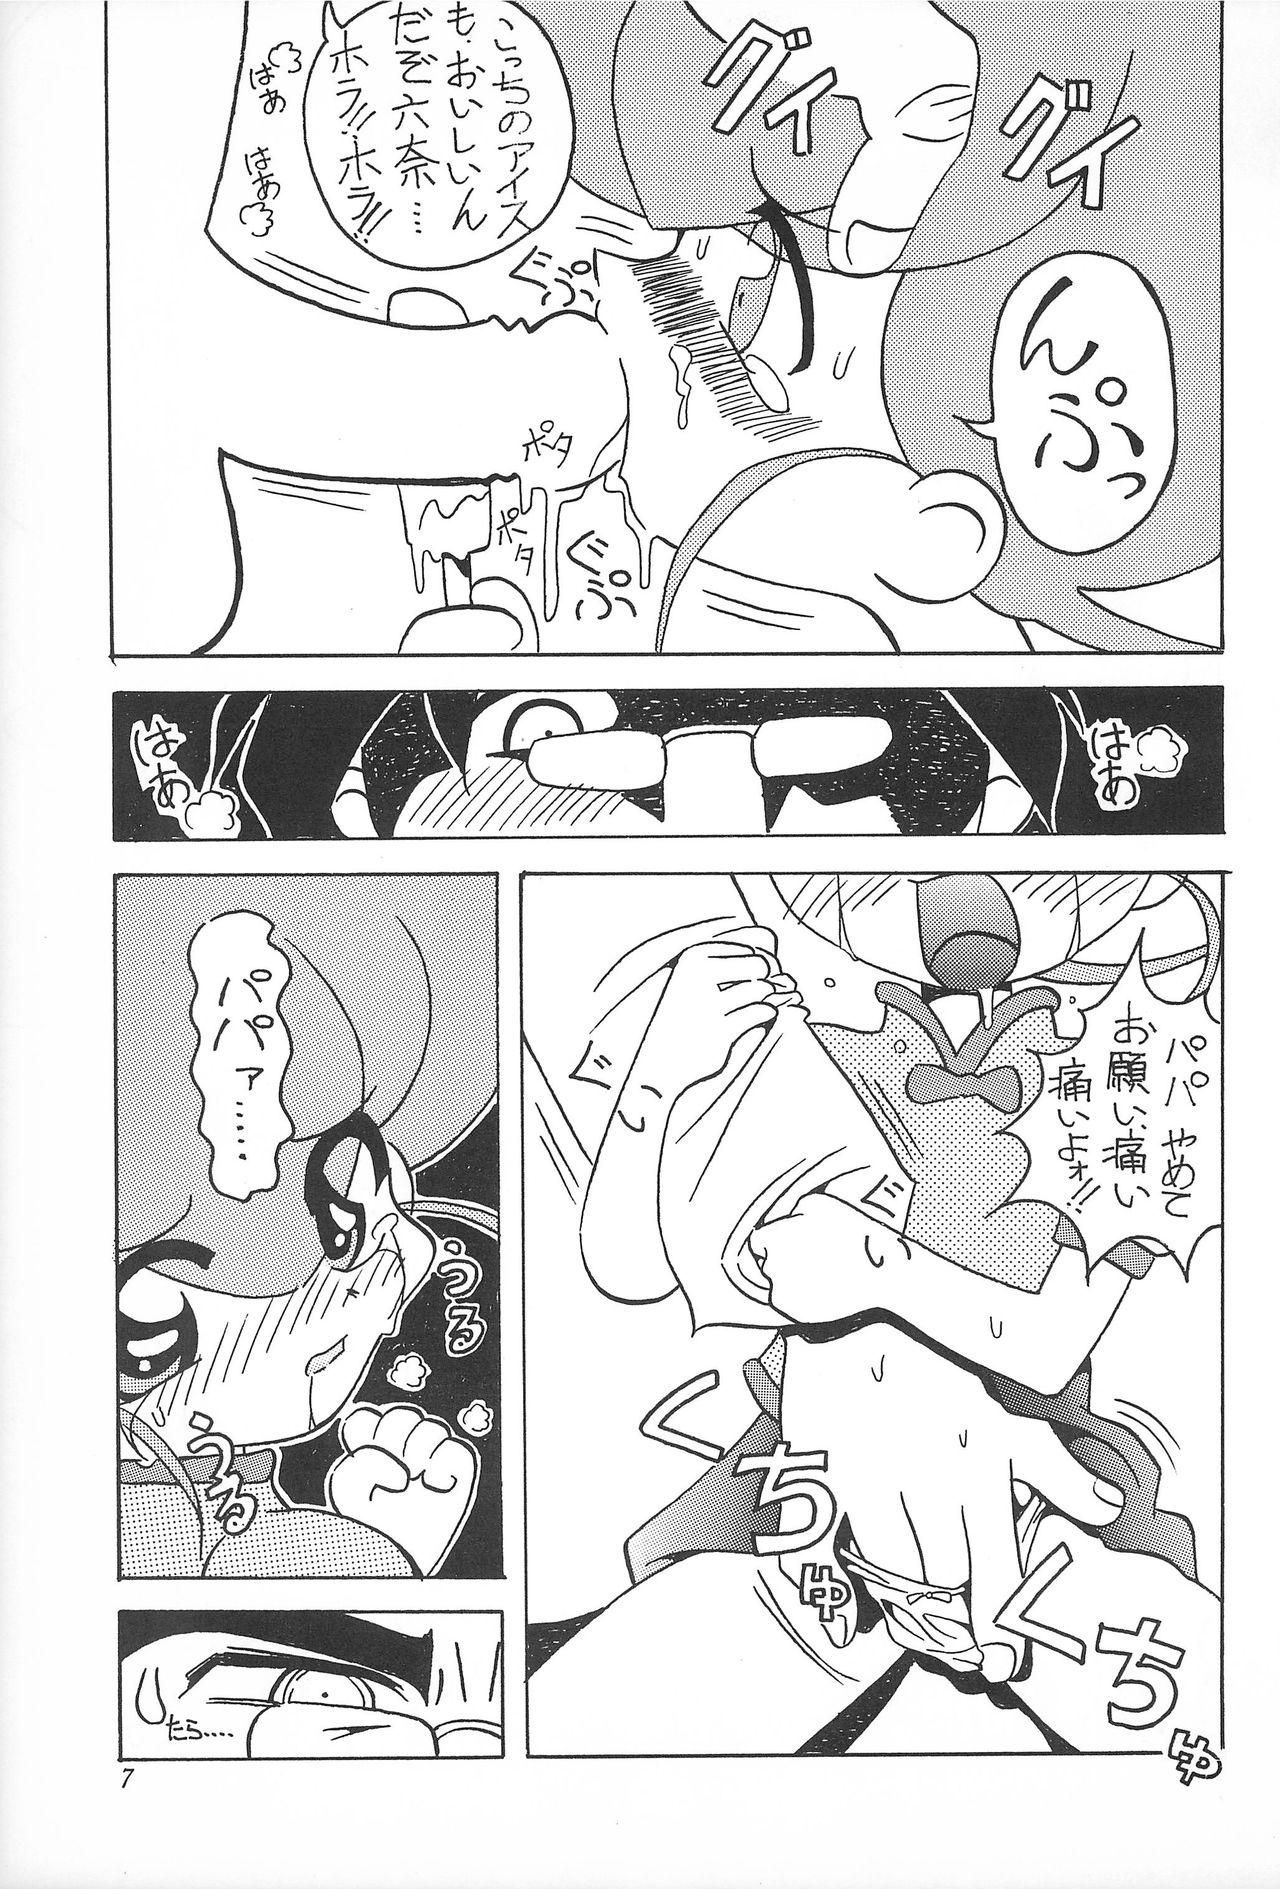 Highheels Rokushin Gattai - Magewappa 13 - Mon colle knights Latex - Page 8